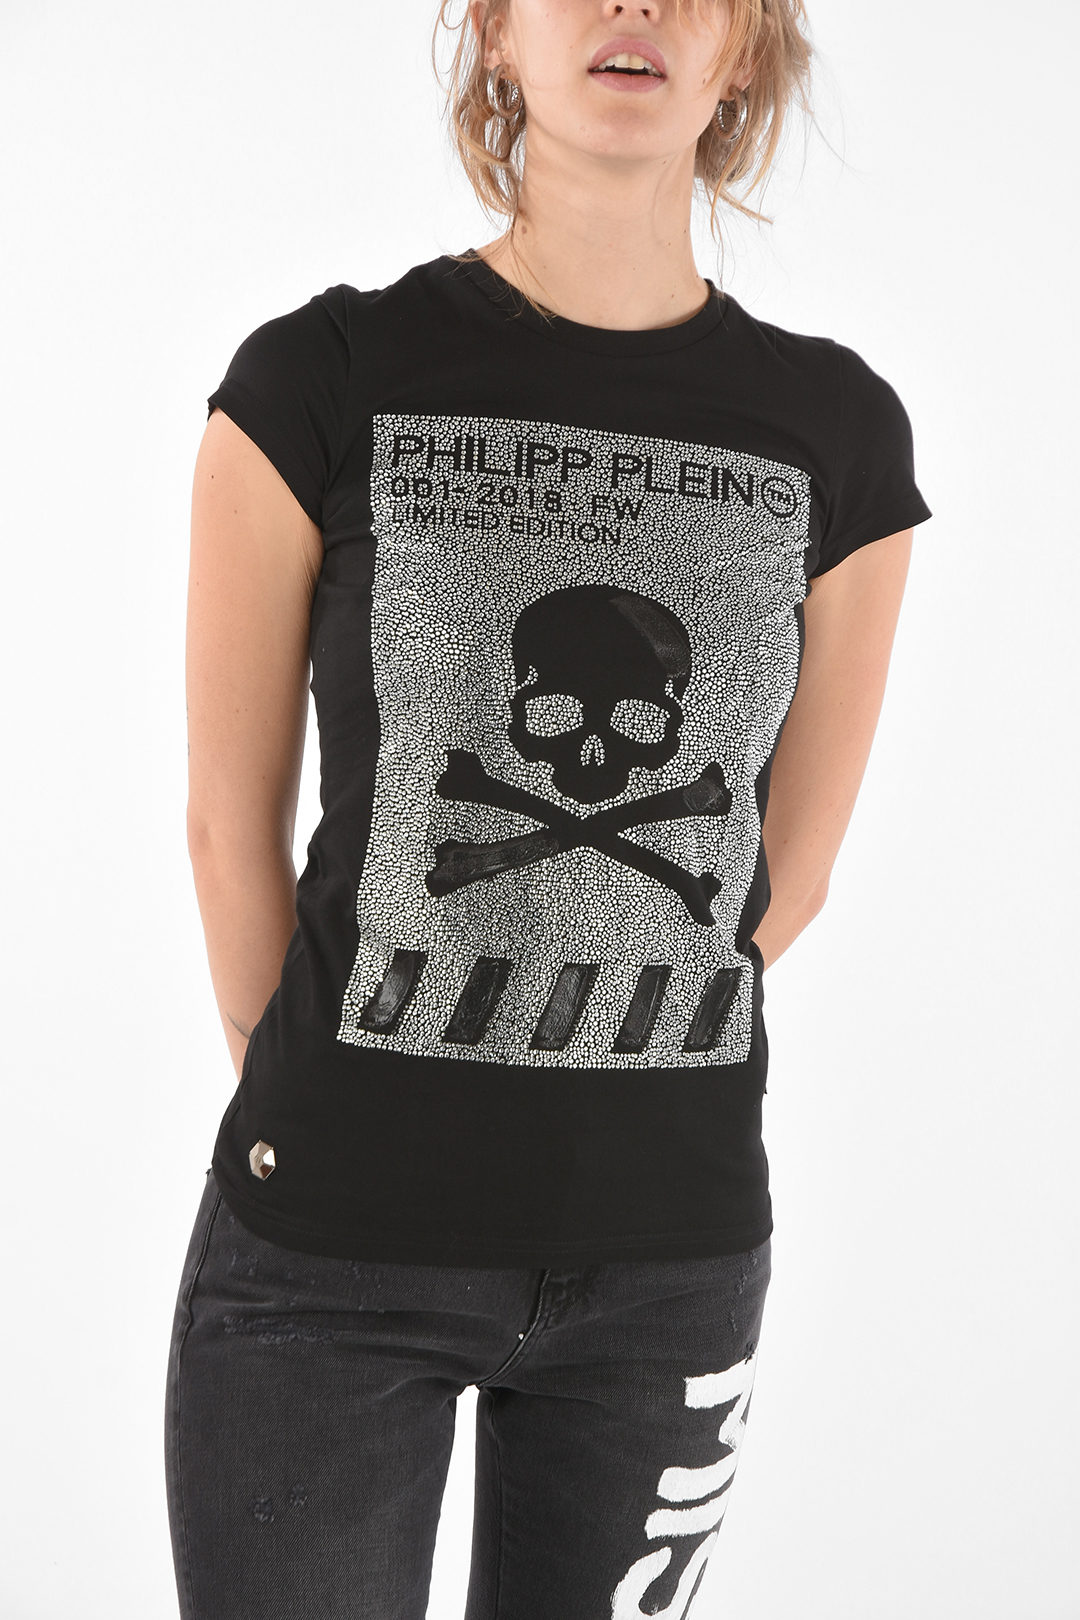 Philipp Neck SKULL Strass T-Shirt damen - Glamood Outlet